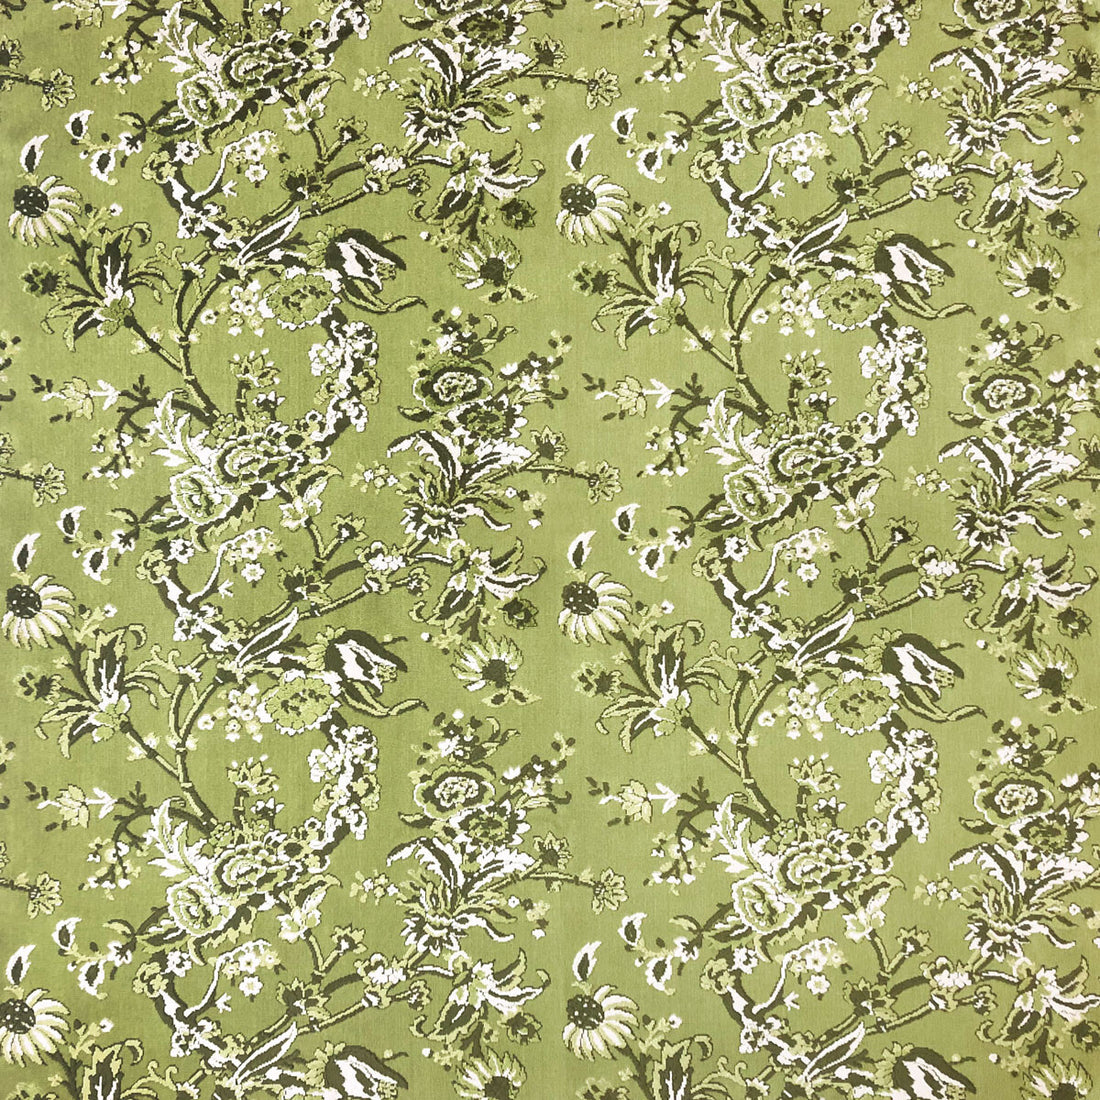 Carlota fabric in verde color - pattern LCT1065.001.0 - by Gaston y Daniela in the Lorenzo Castillo VI collection